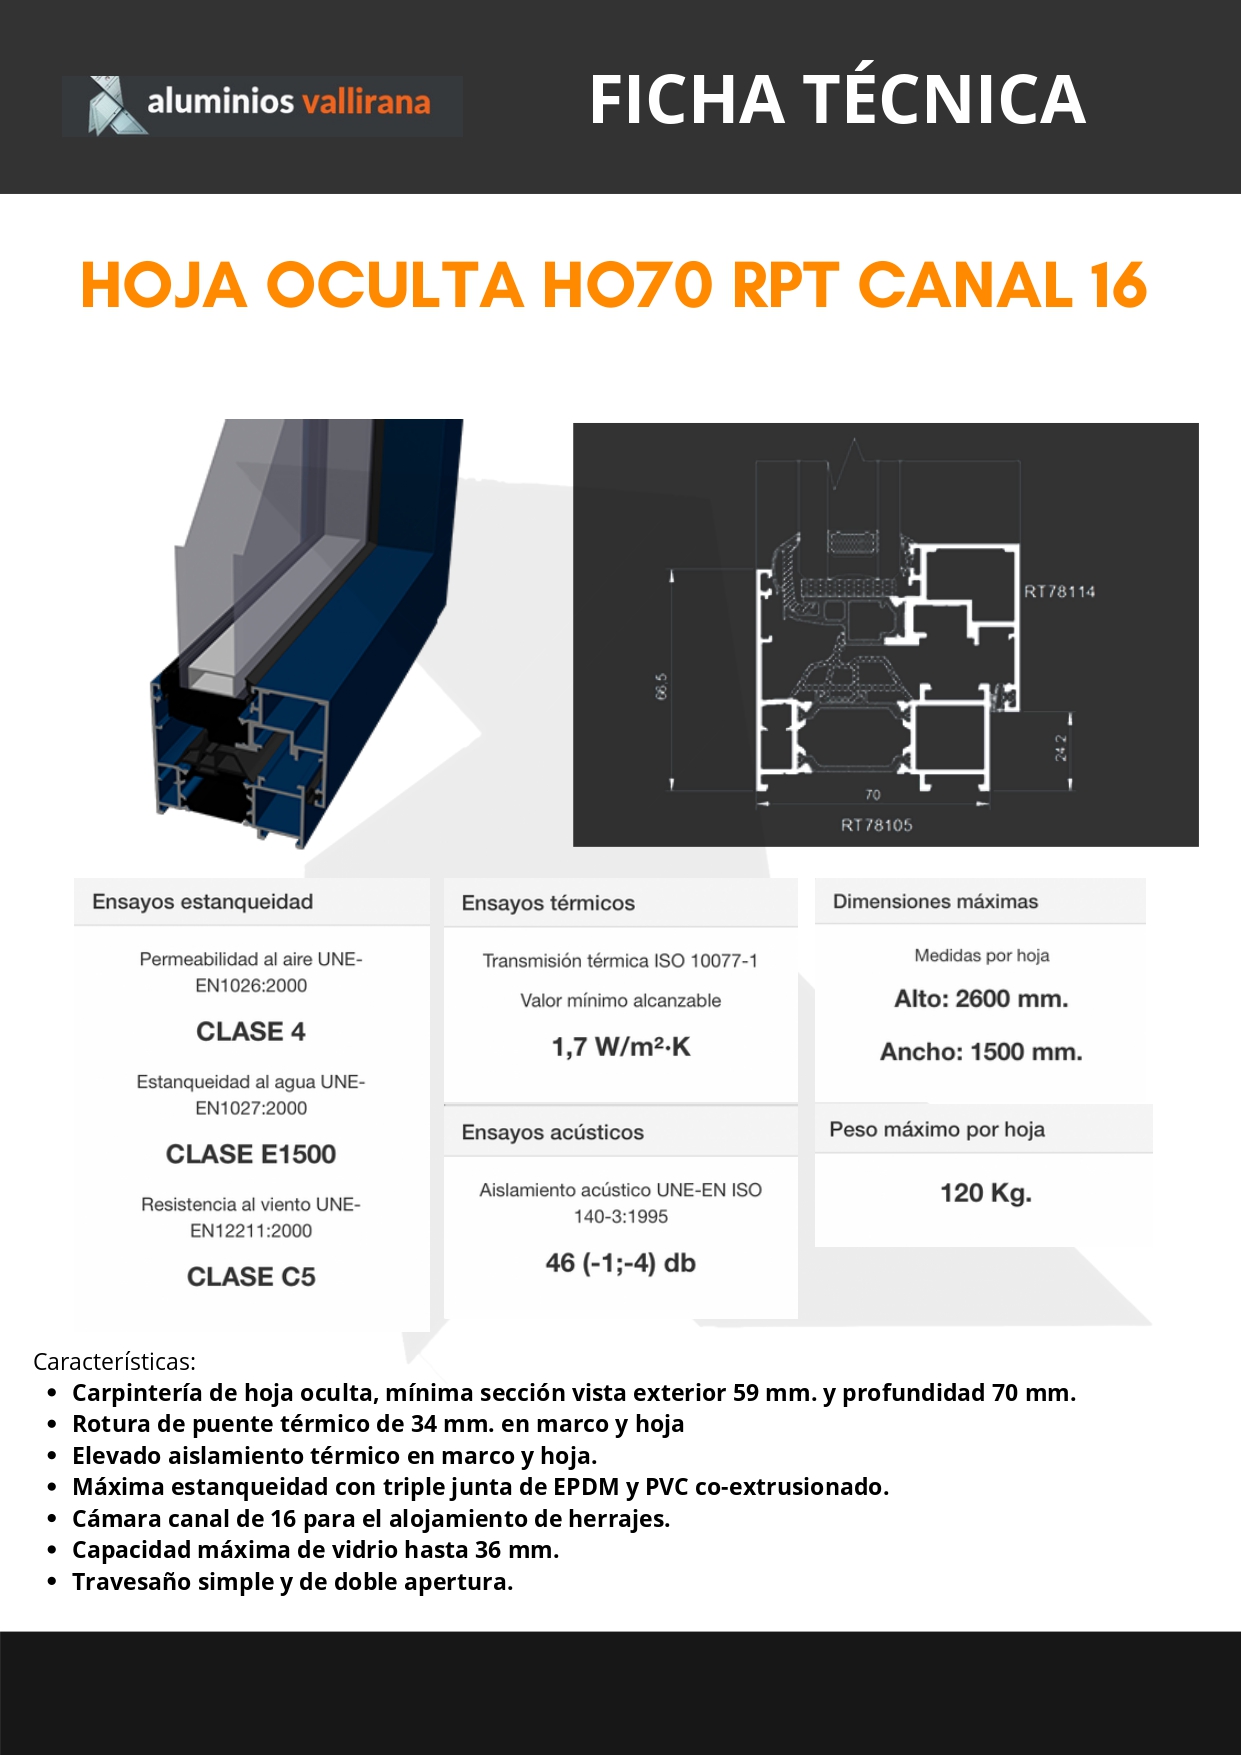 Ficha técnica HO 70 RPT CANAL 16 